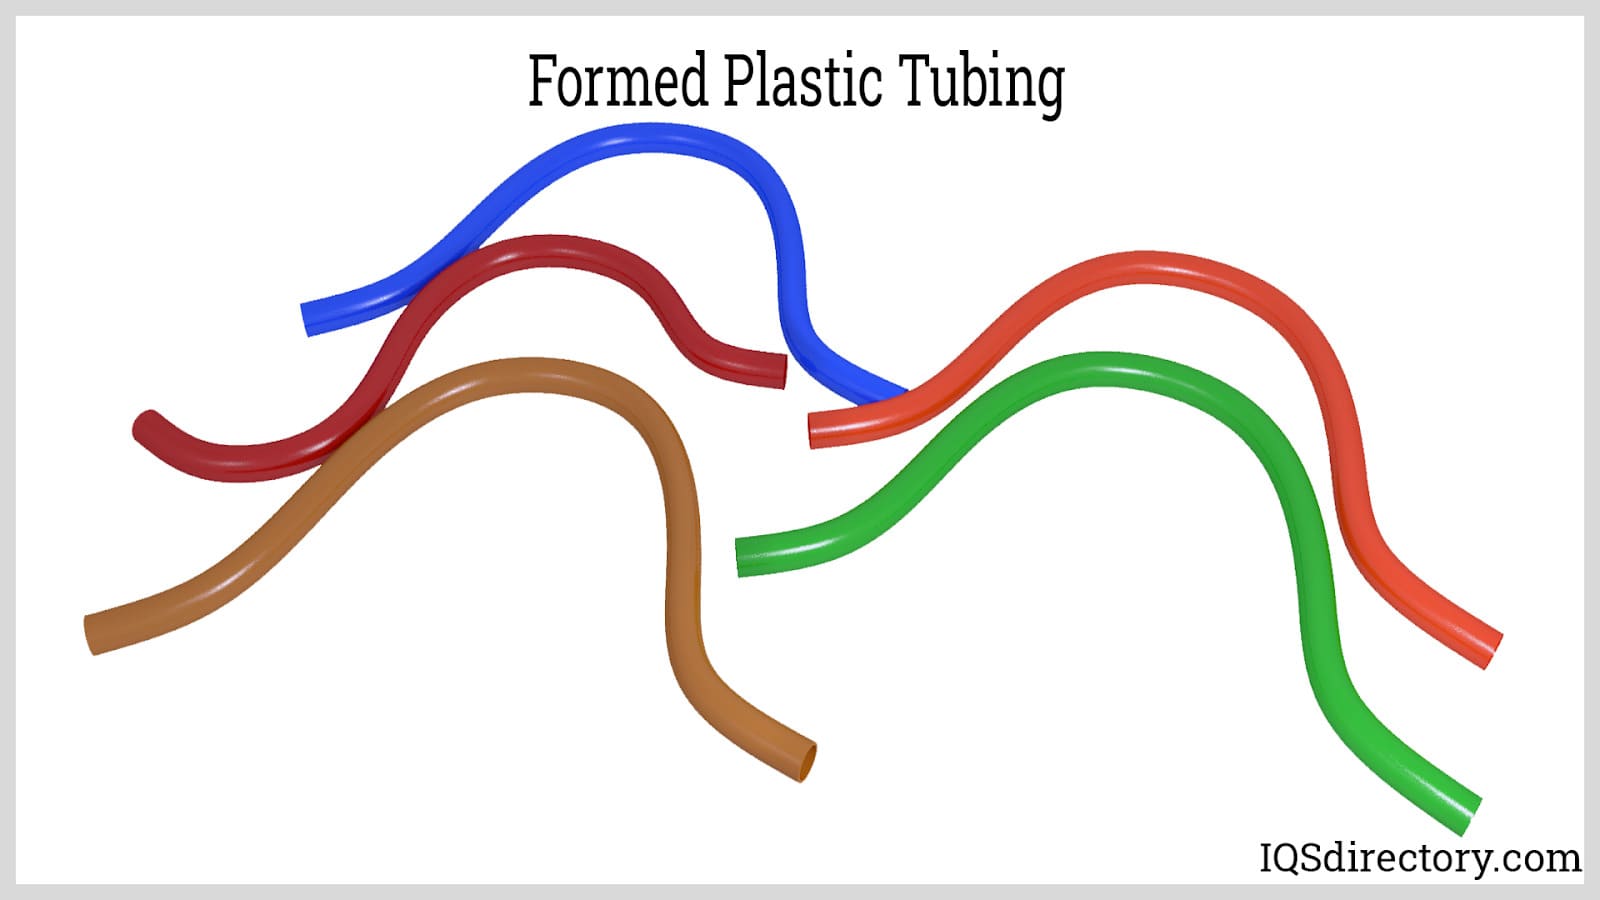 Formed Plastic Tubing